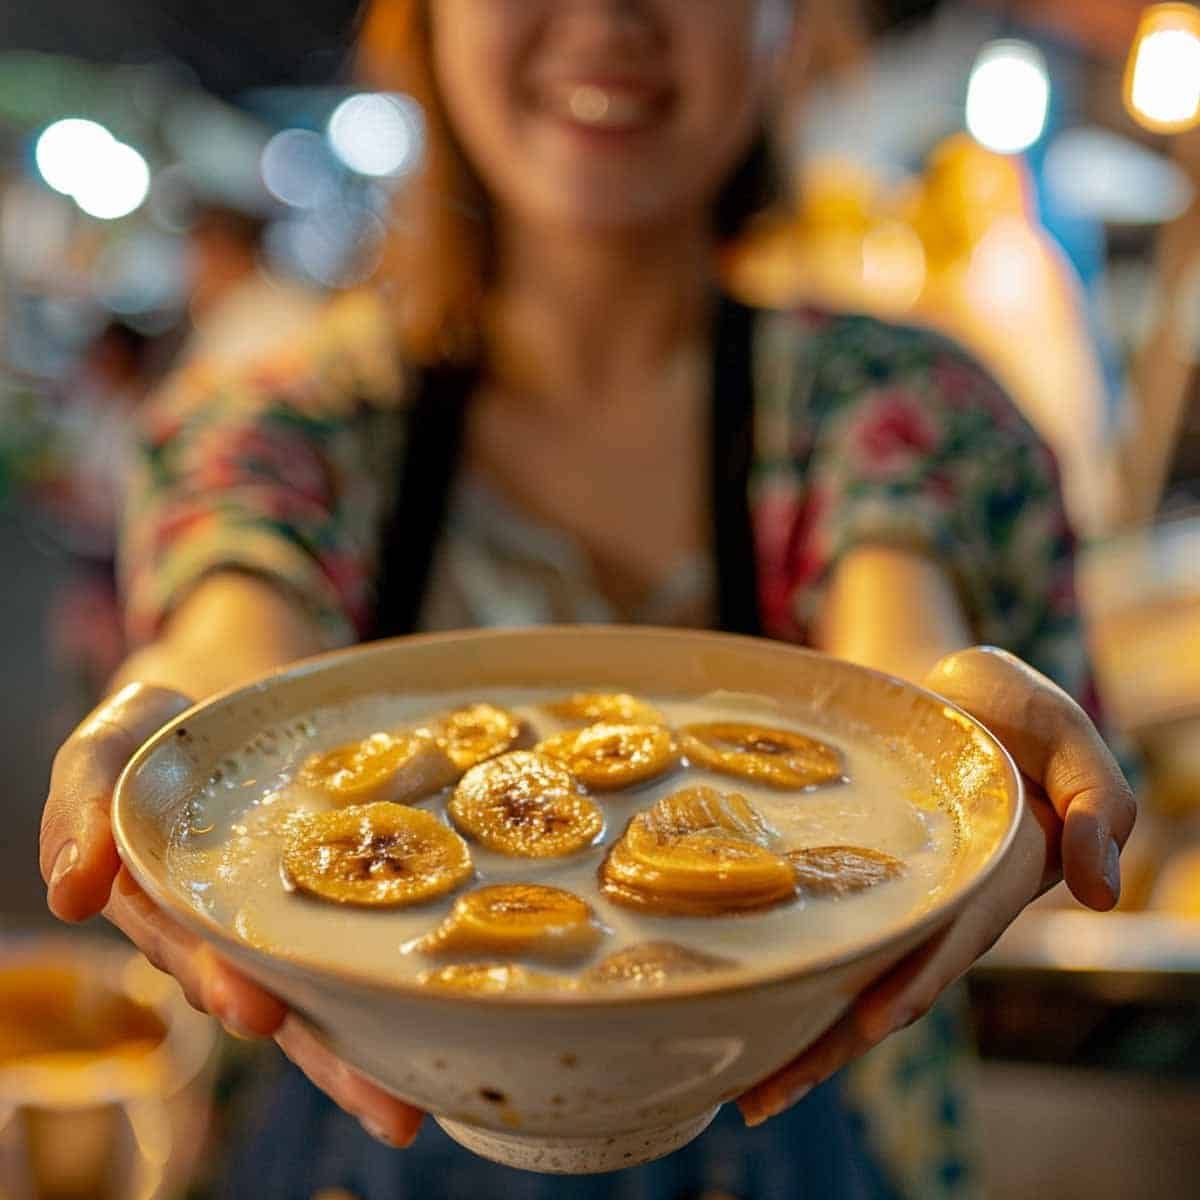 Thai woman serving a bowl of Bananas in Coconut Milk Dessert (Kluay Buat Chee) at night market.